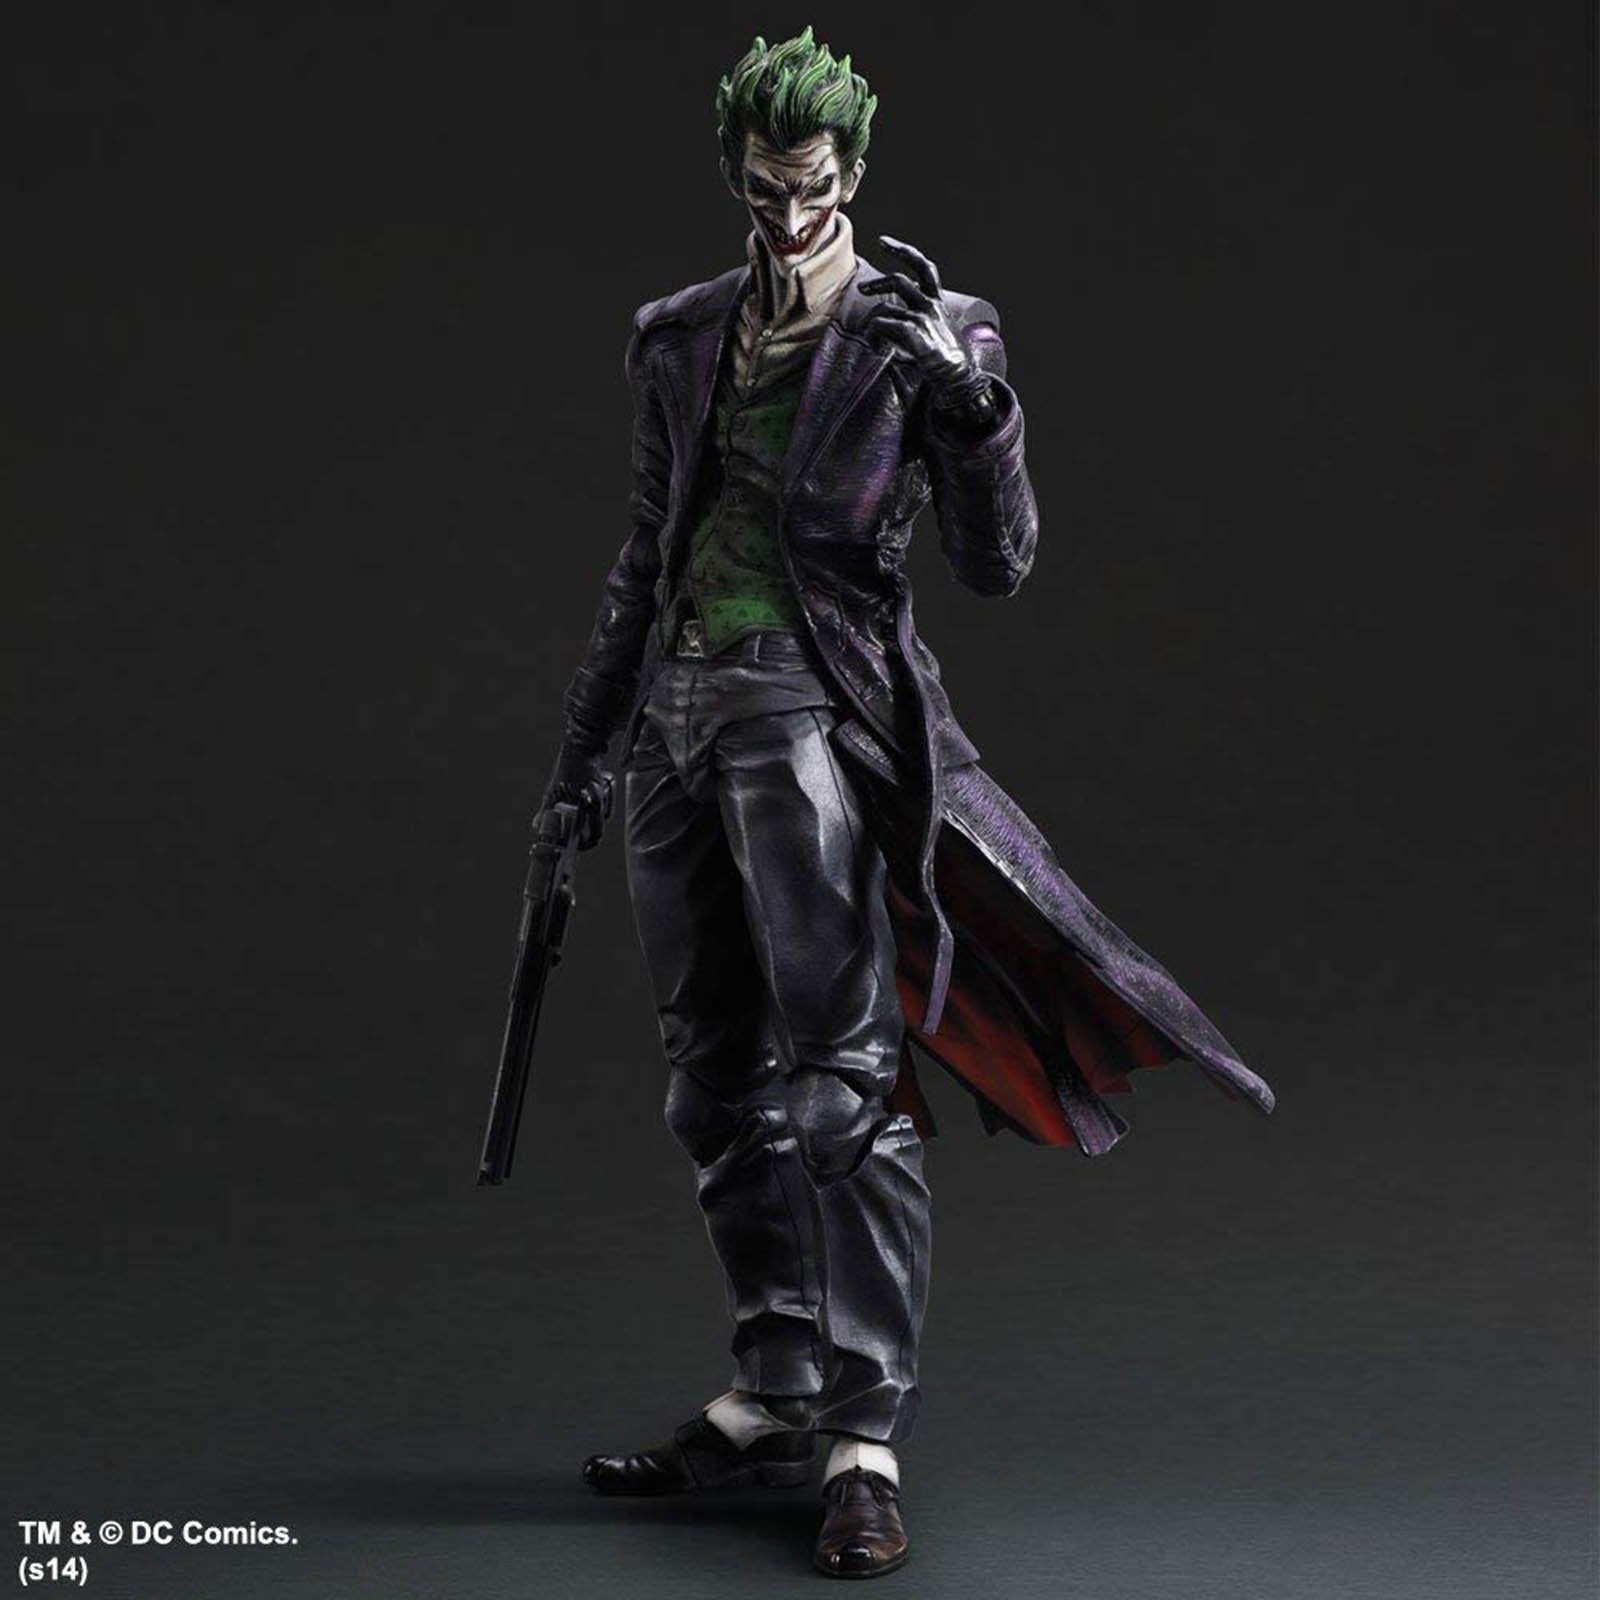 Play Arts Kai Batman Arkham Origins No.4 The Joker PVC Action Figure Model Toy 